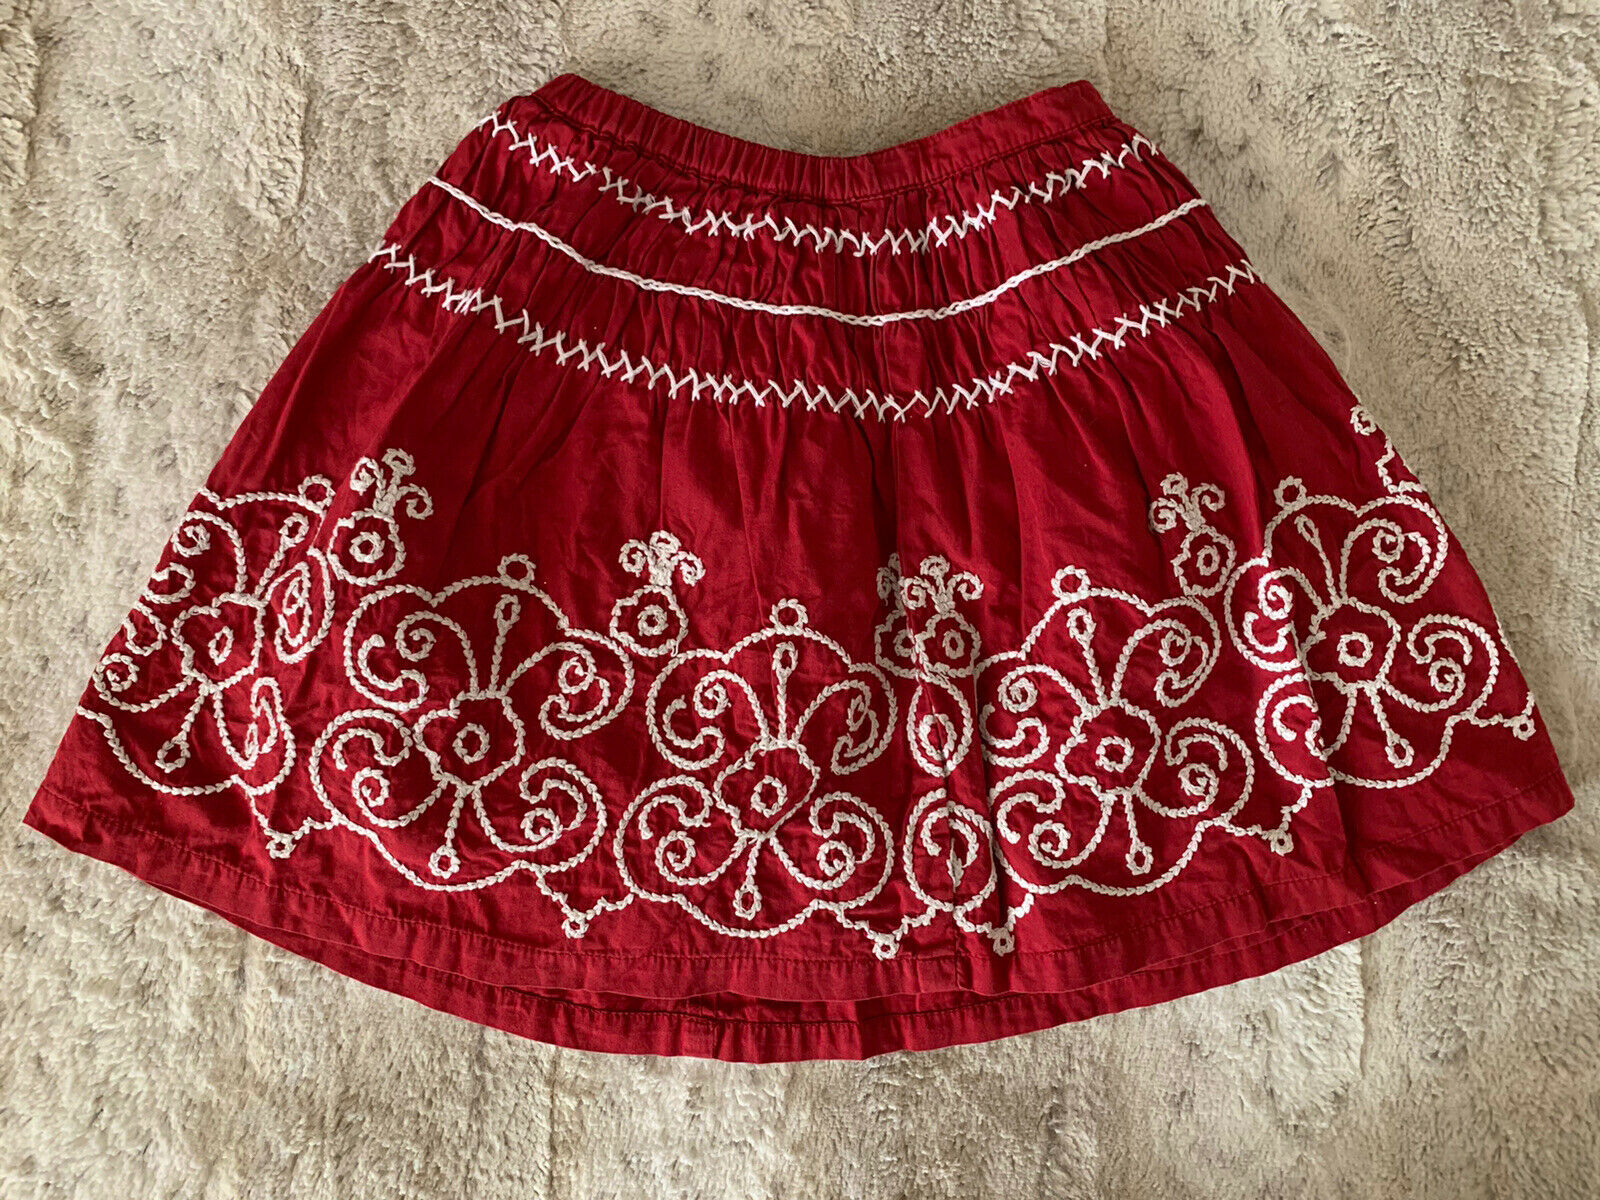 Mini Boden Girls Skirt Size 3/4 Years